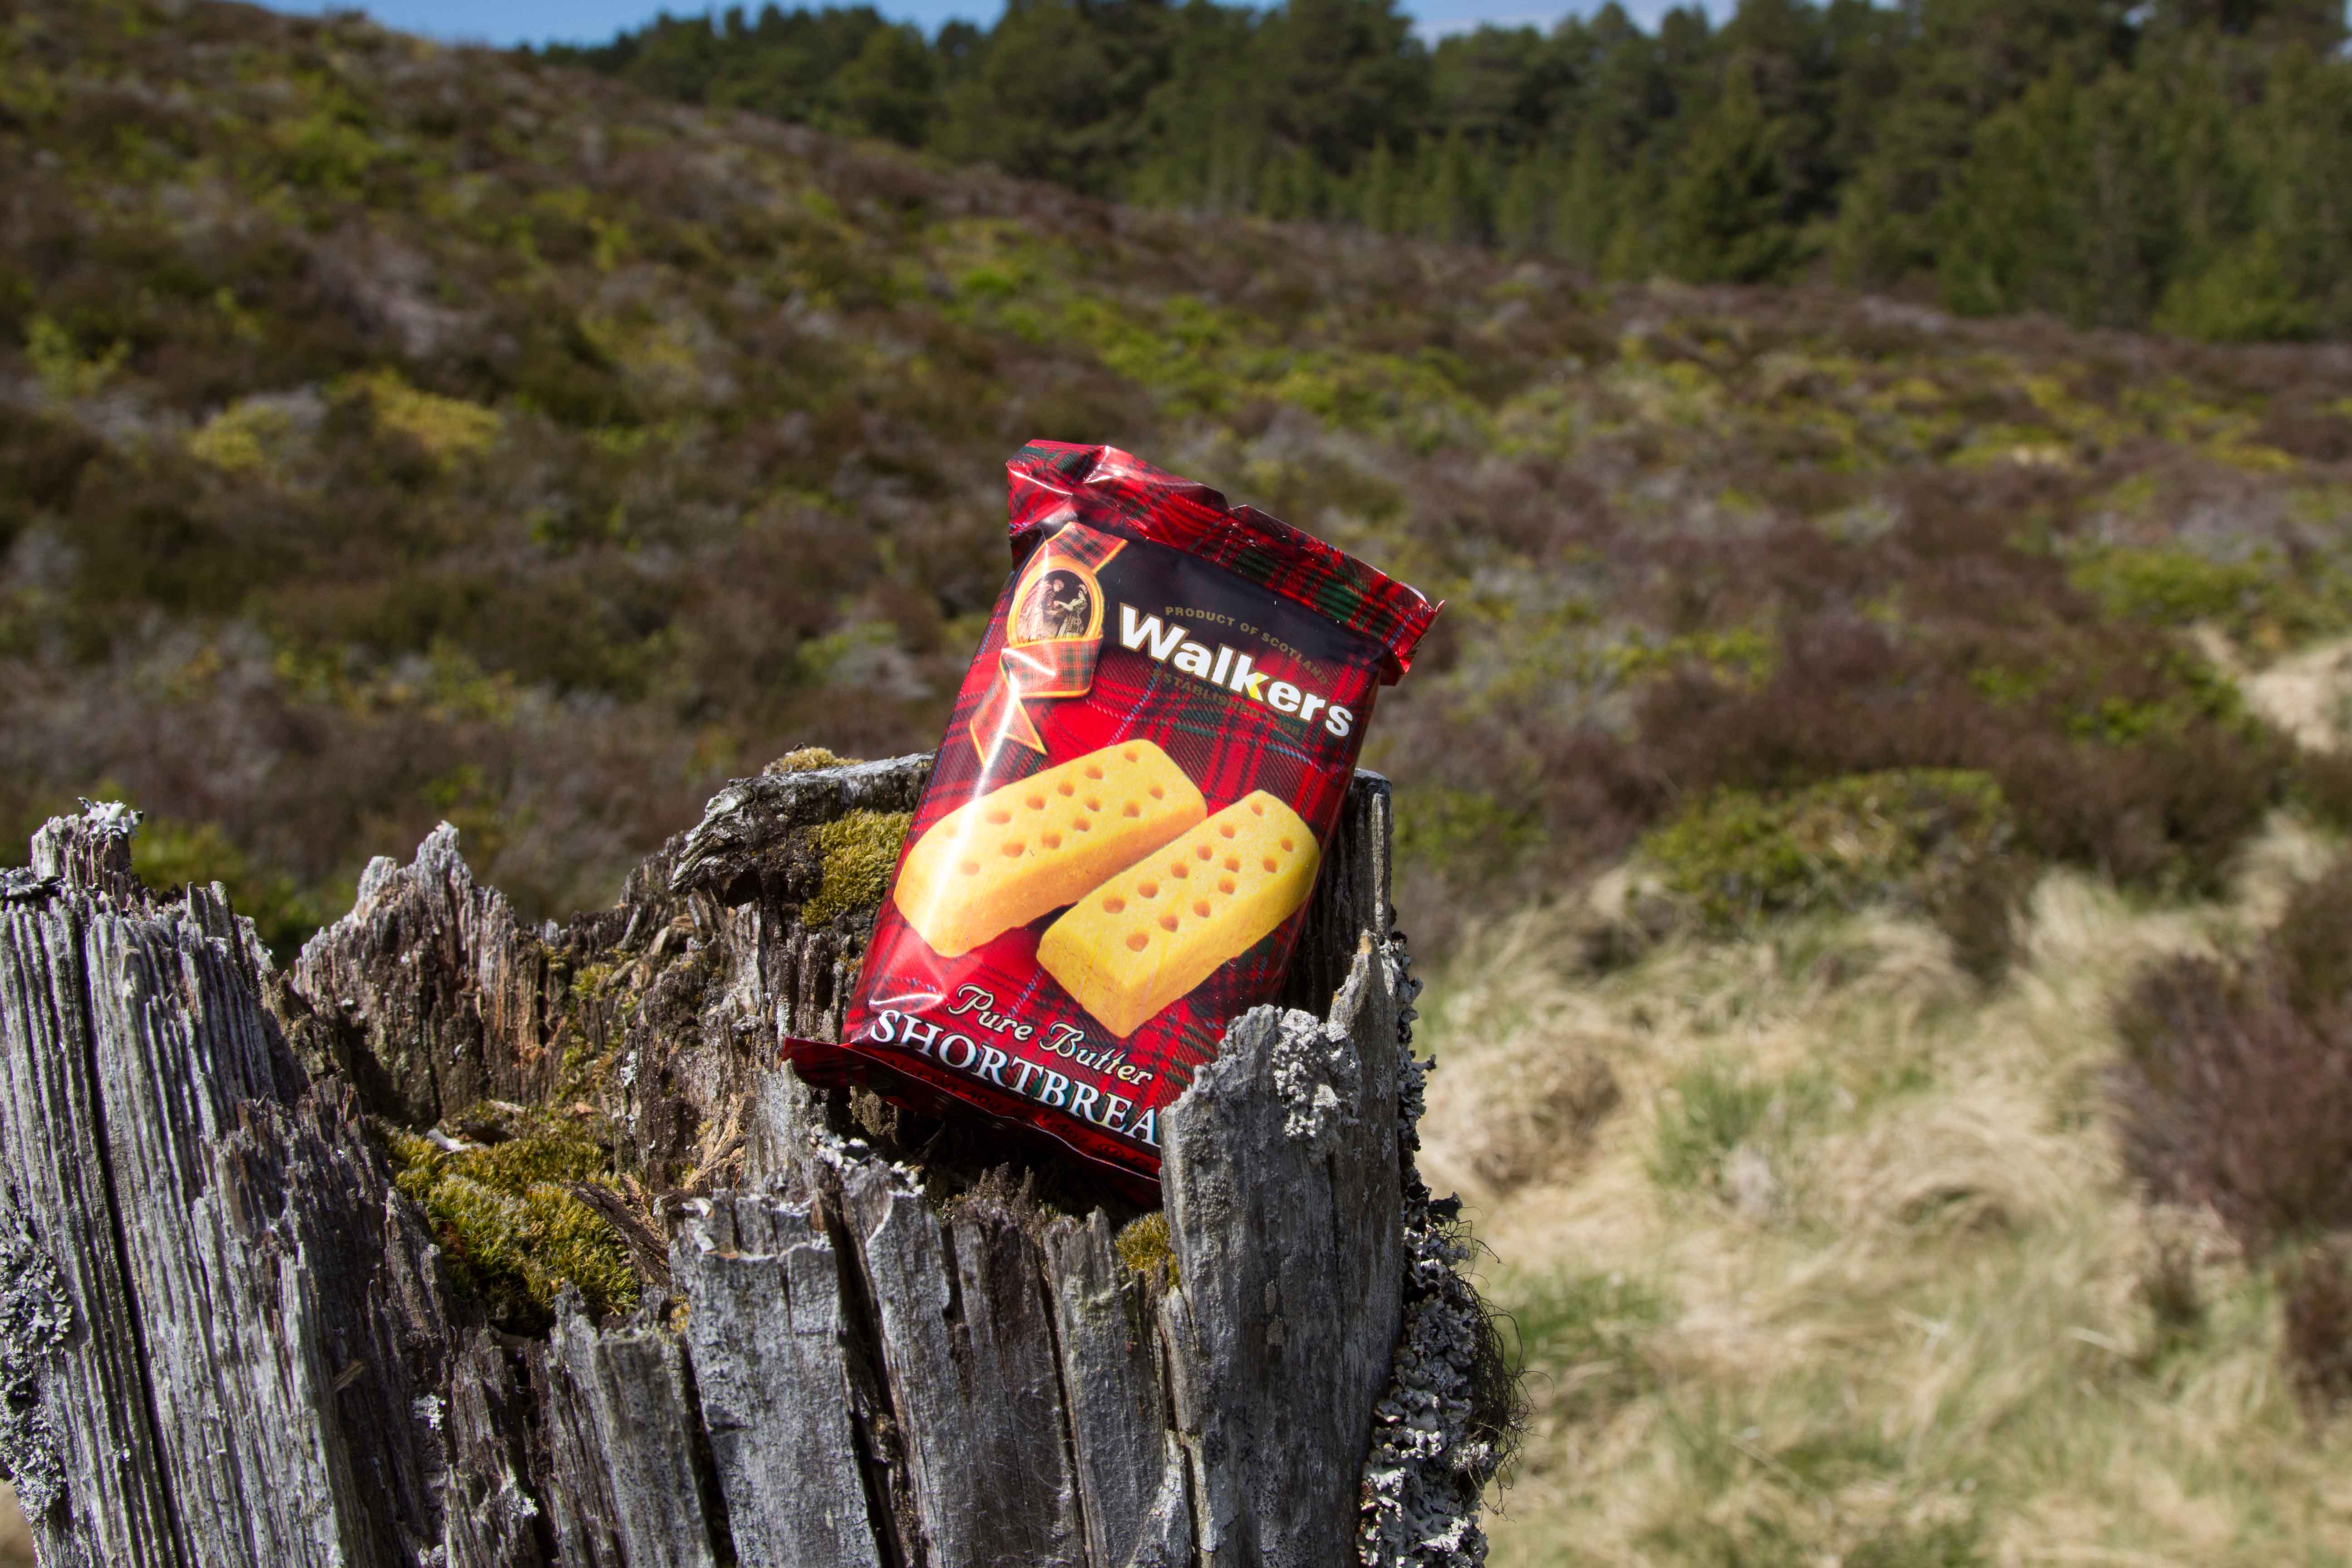 Walkers Shortbread snackpack lying on bark within scottish landscape